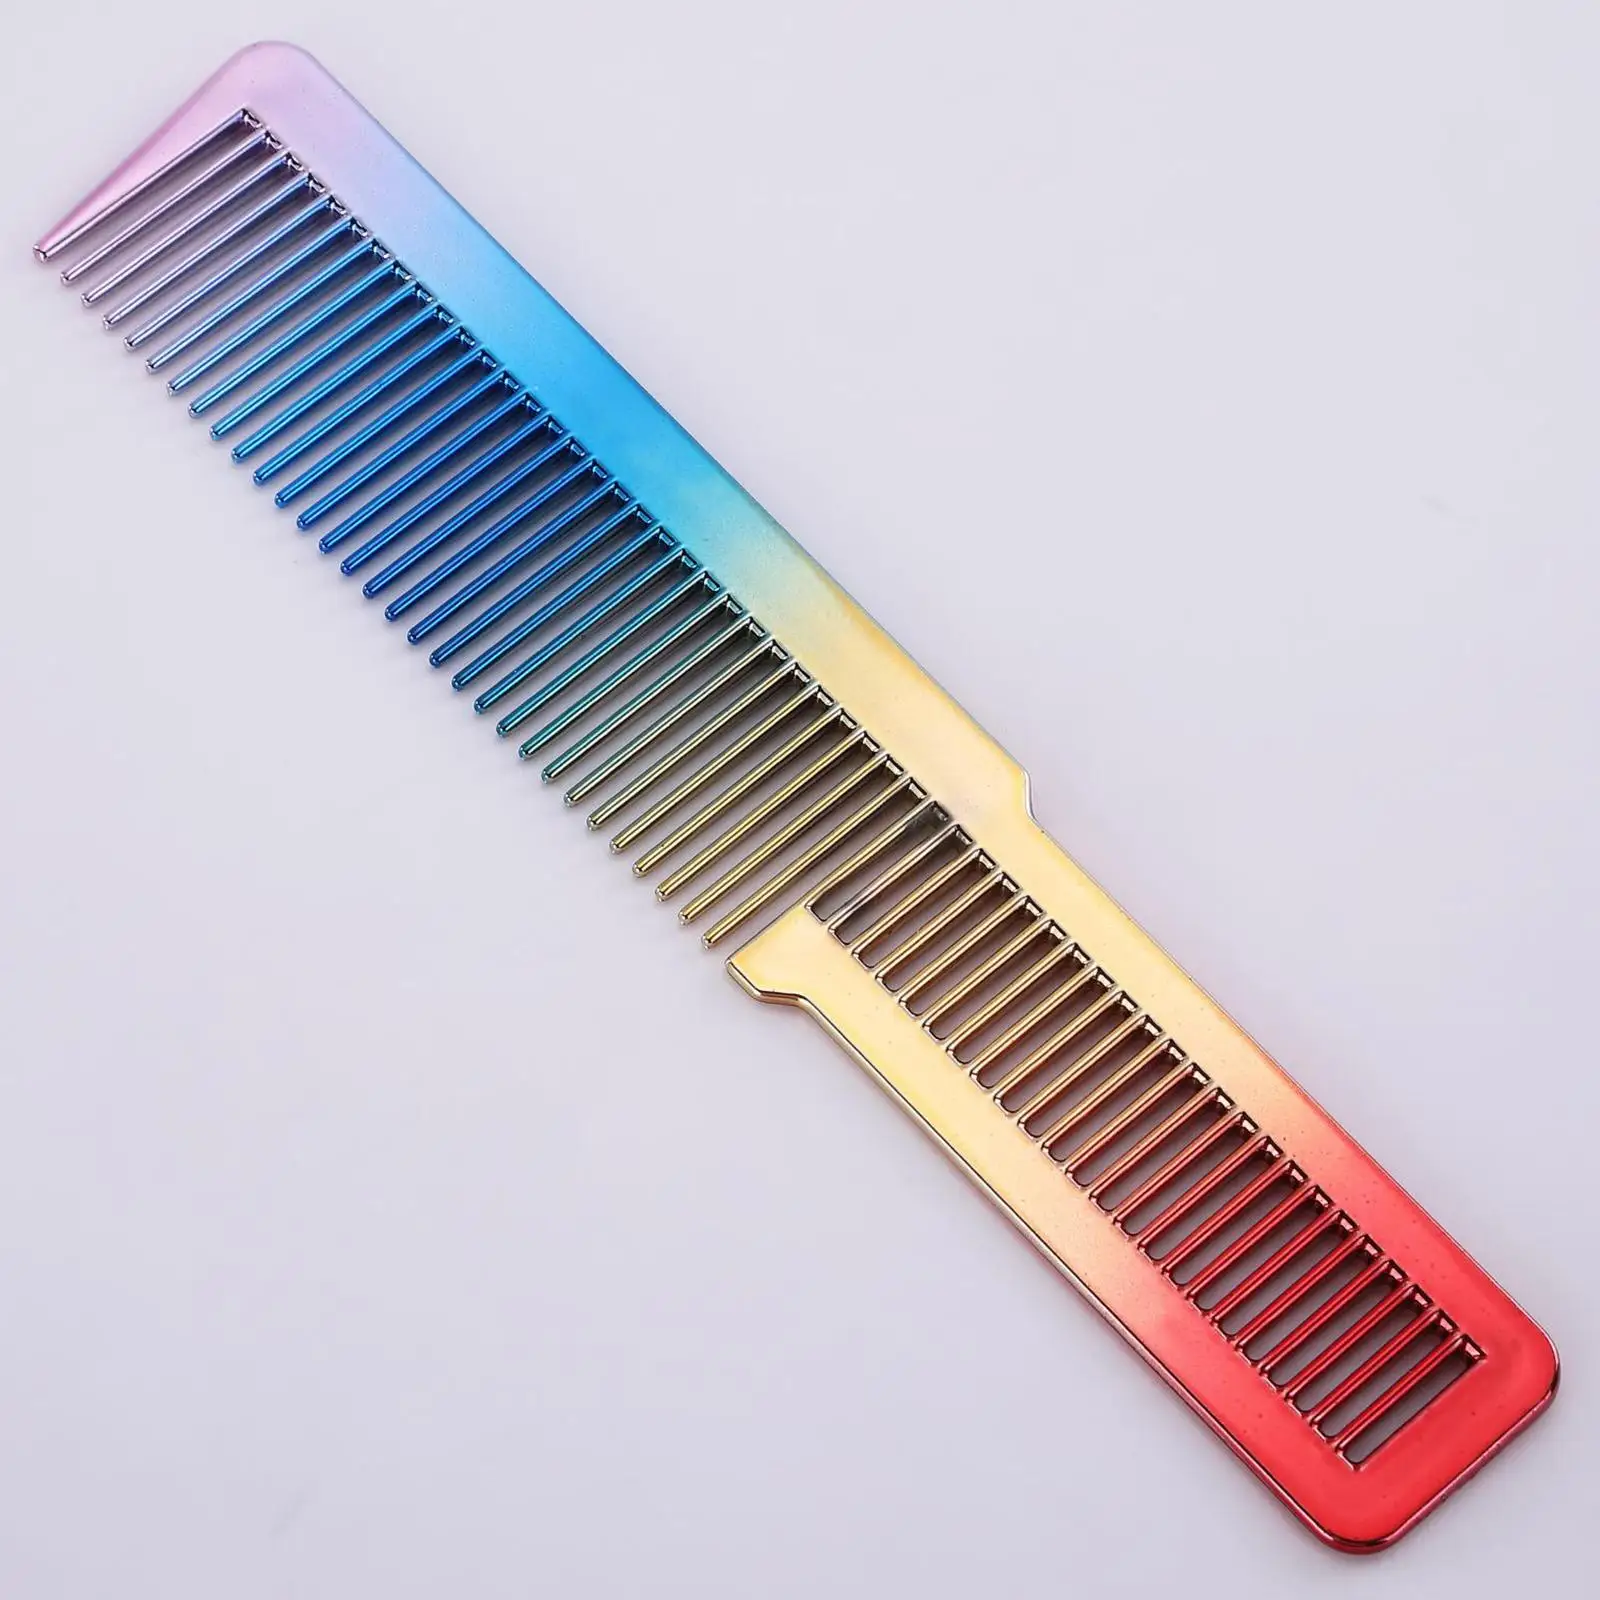 2X Hair Cutting Comb Barbers Salon Hair Hairdressing Combs Flat Top Comb